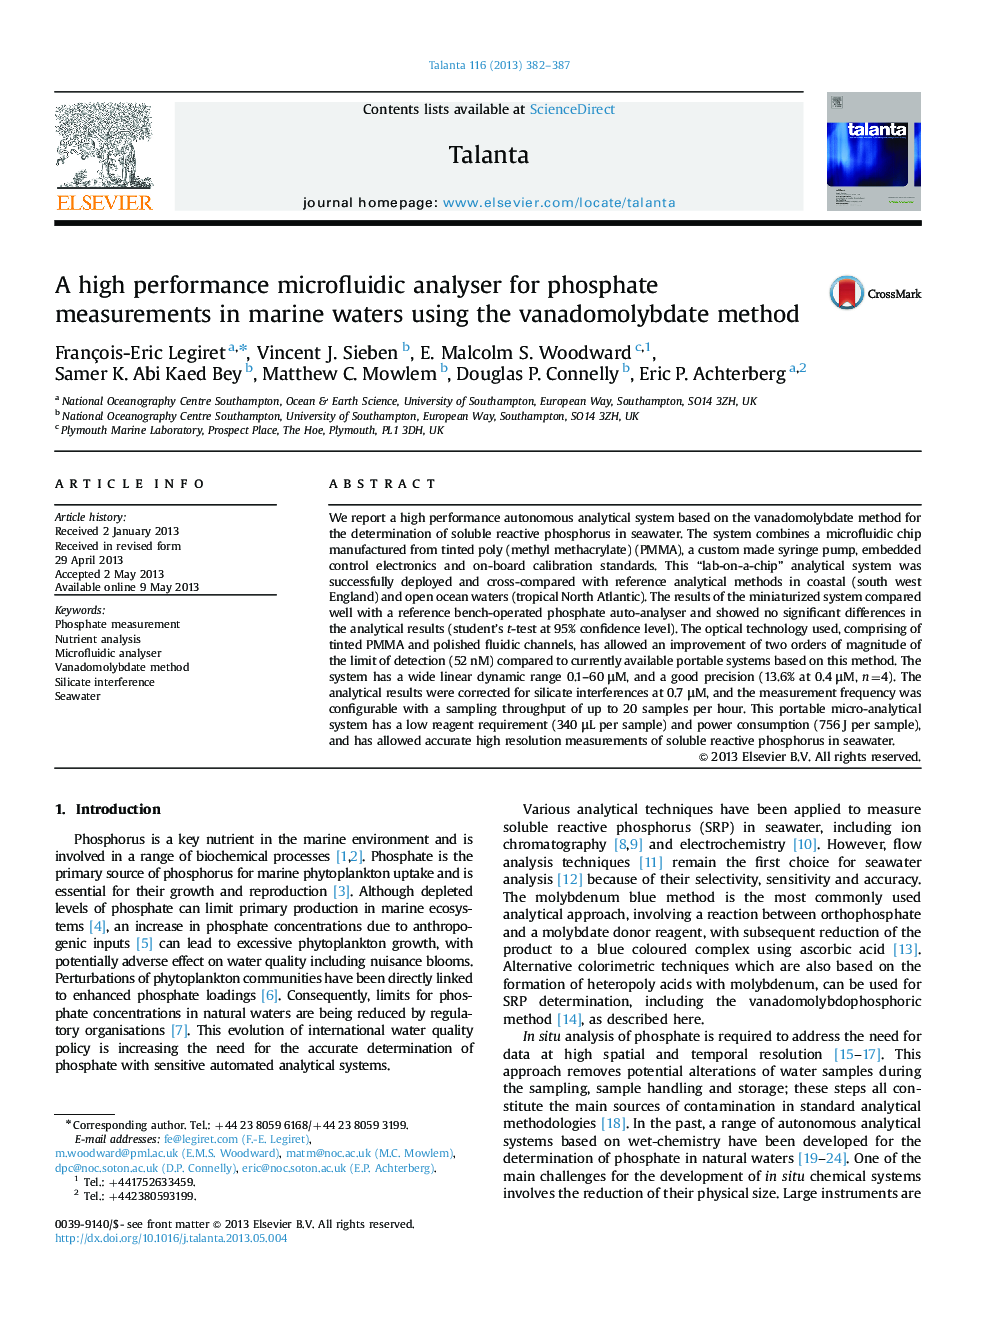 A high performance microfluidic analyser for phosphate measurements in marine waters using the vanadomolybdate method